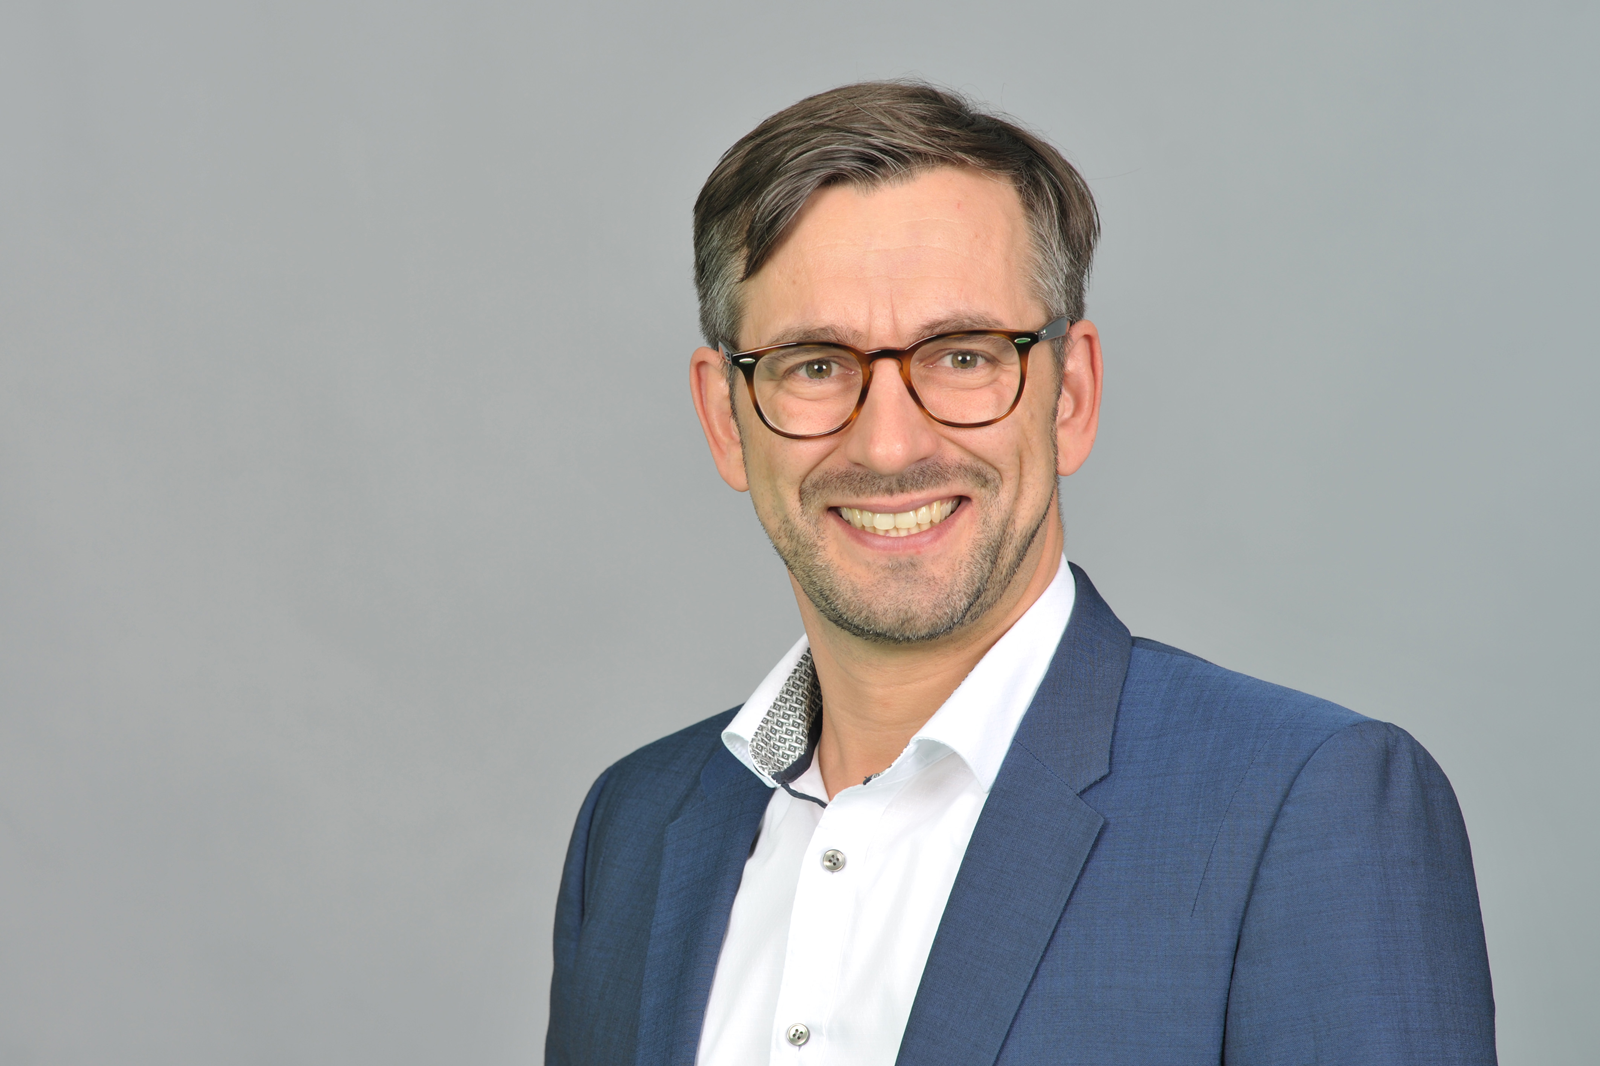 Dominik Möllenbrink | Project Engineer @ RWE Technology GmbH